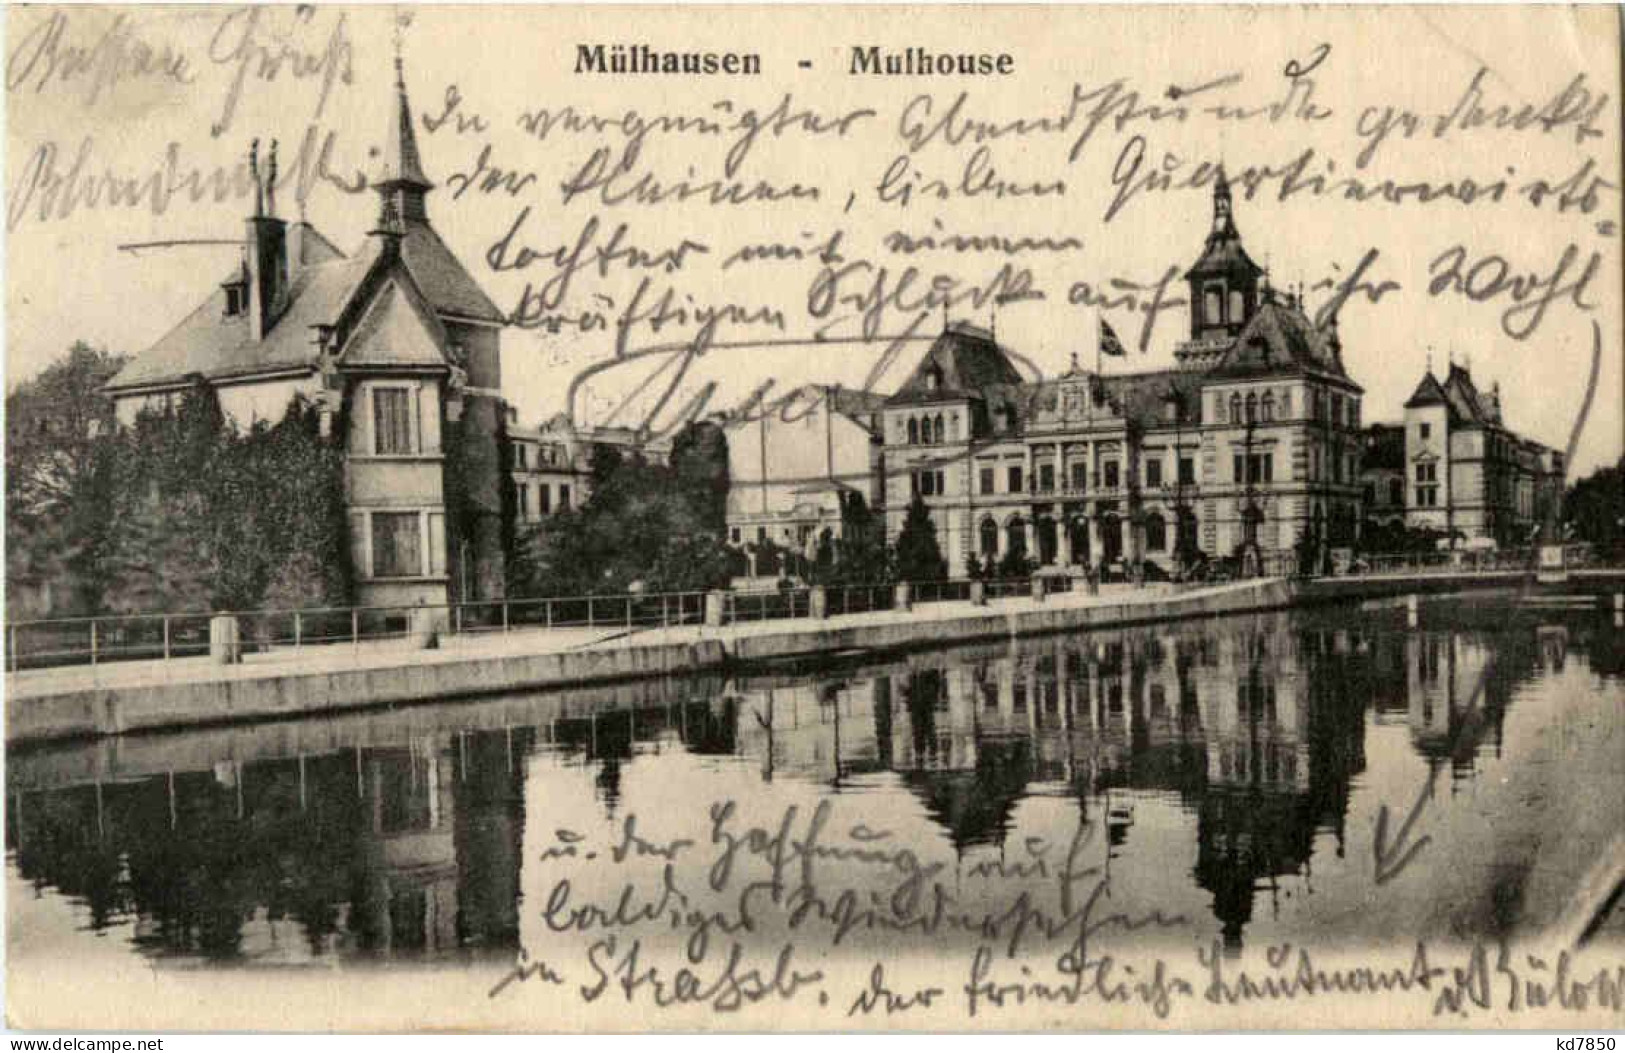 Mulhouse - Mulhouse